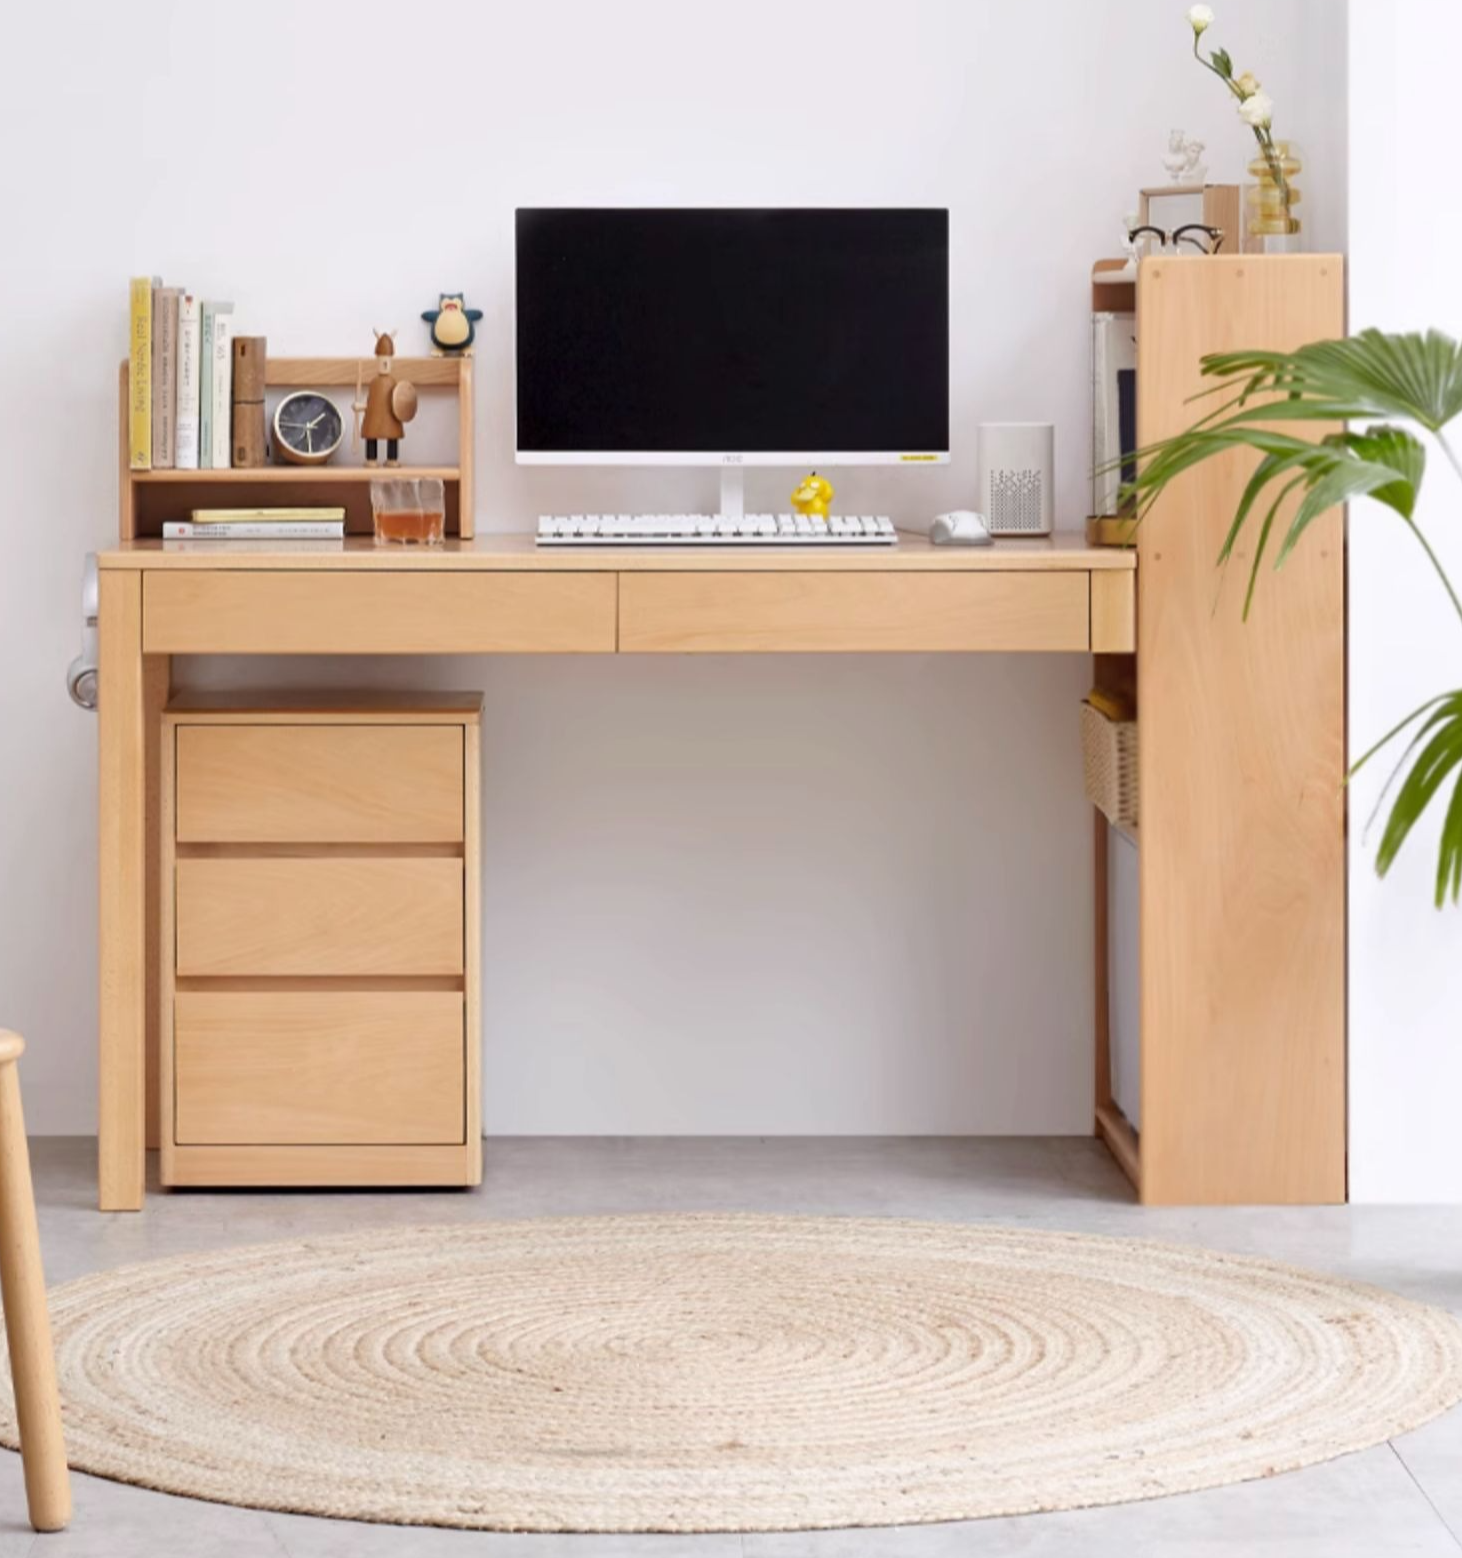 Beech solid wood multi-functional office desk combination "